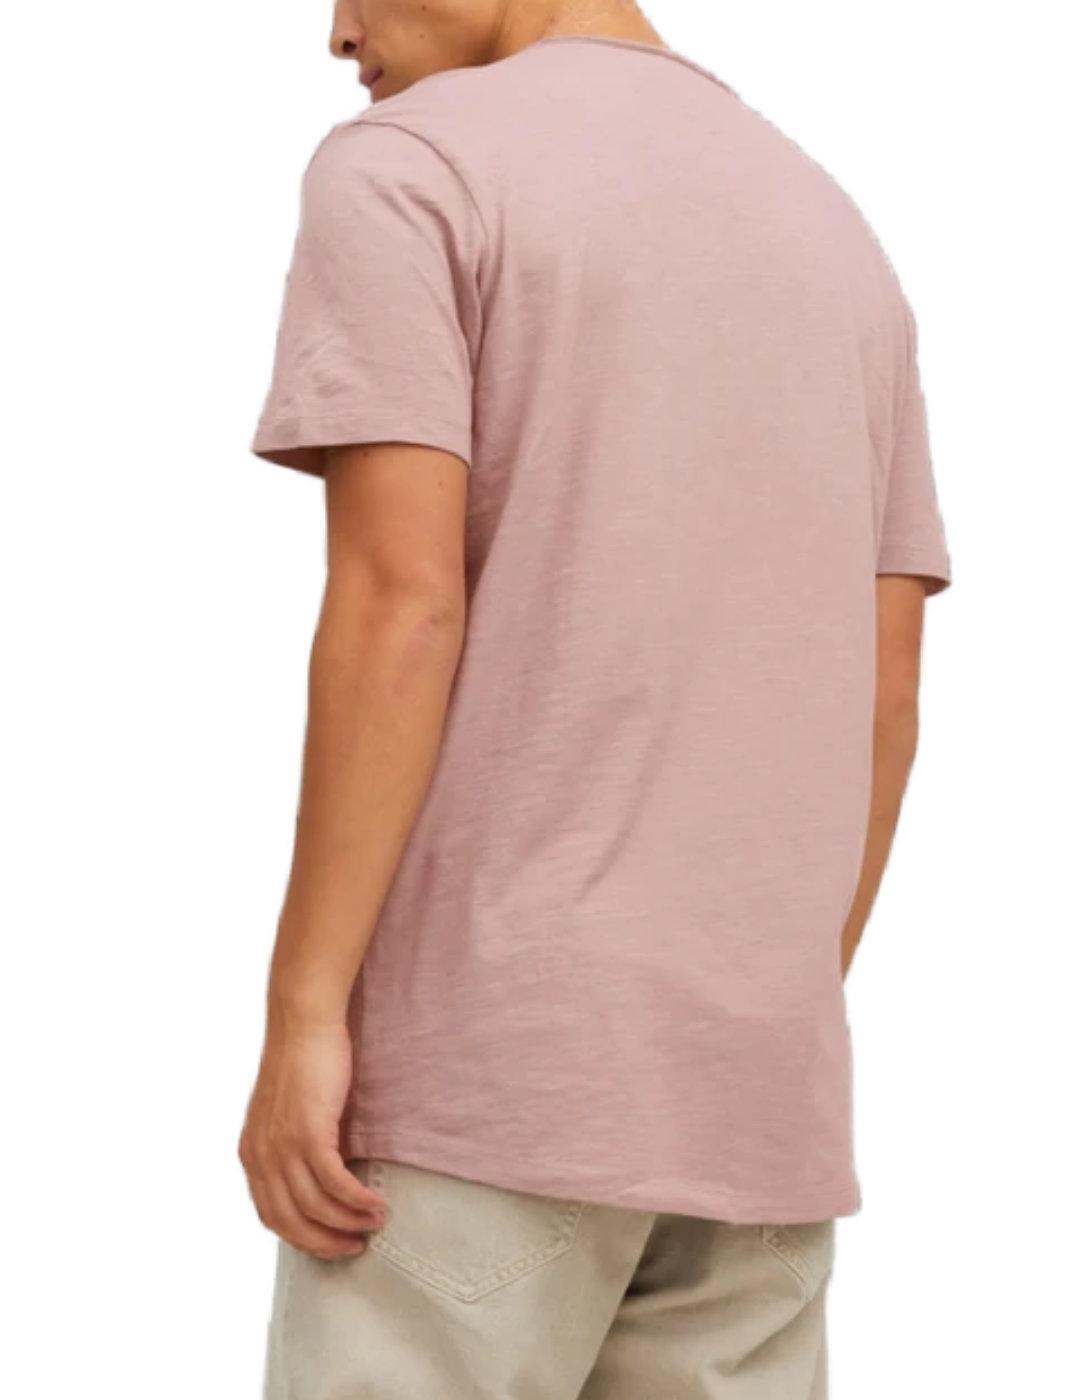 Camiseta Jack&Jones Basher rosa manga corta de hombre